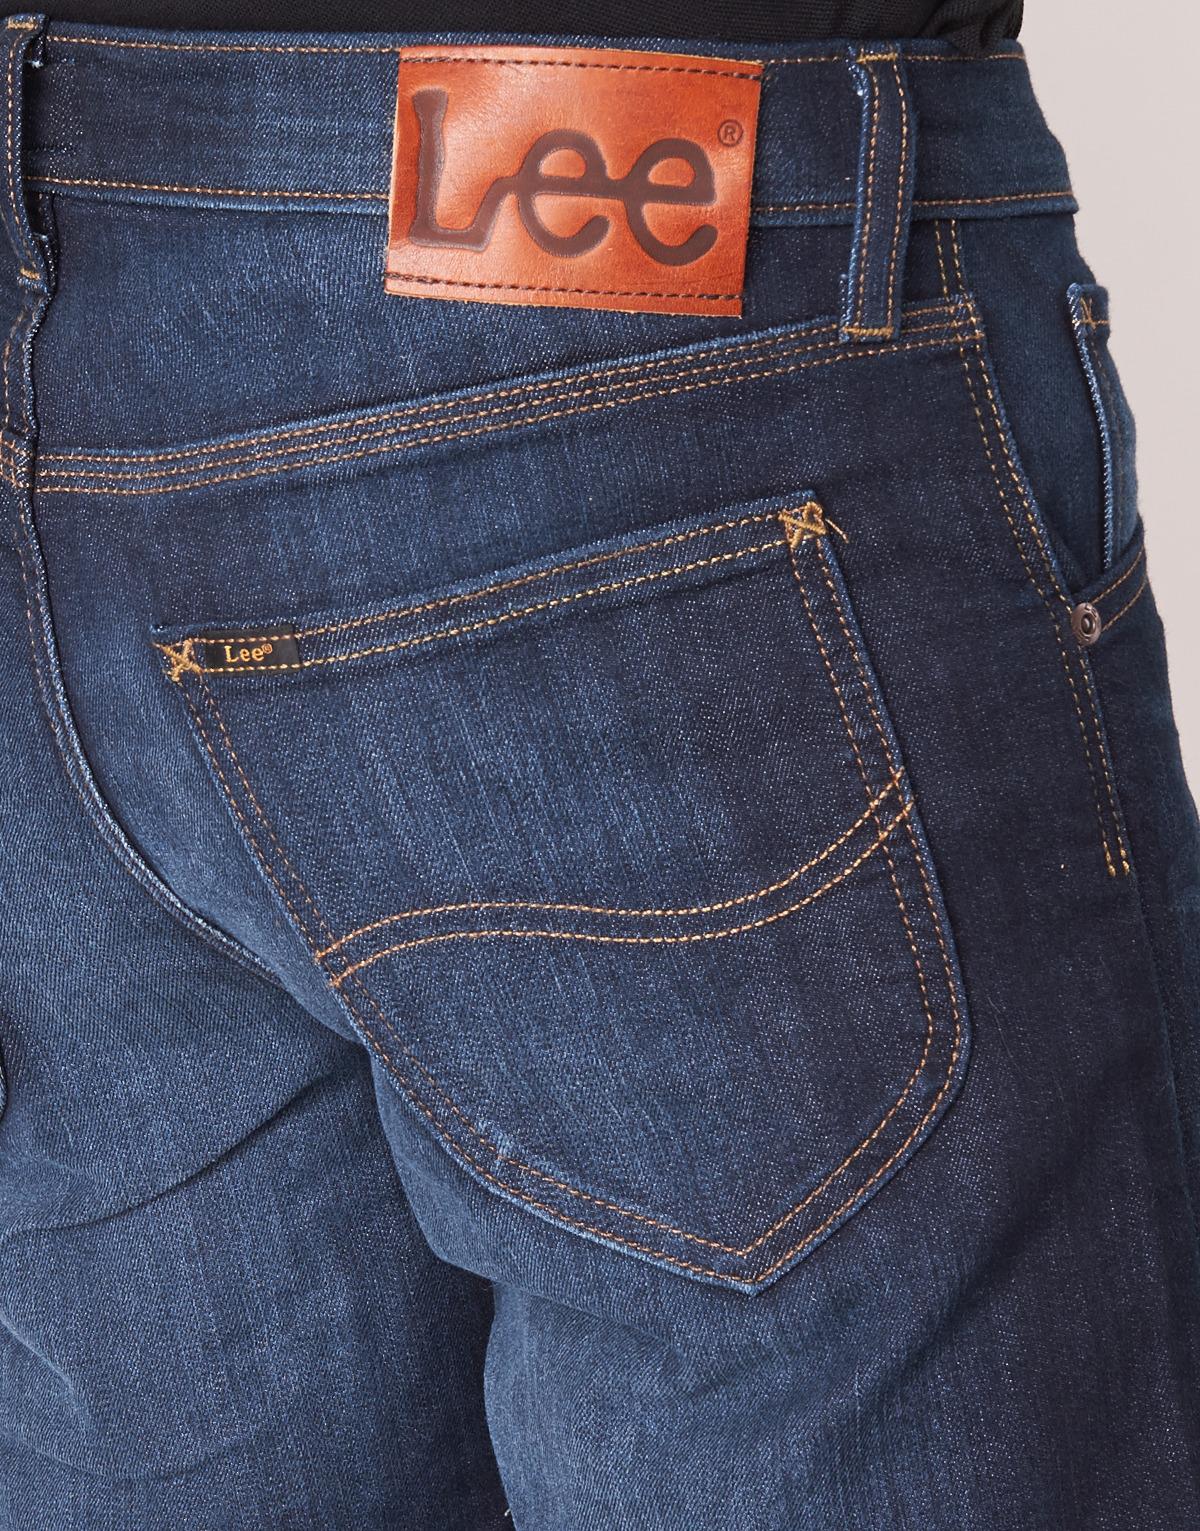 Lee Jeans Denim Daren Jeans in Blue for Men - Lyst